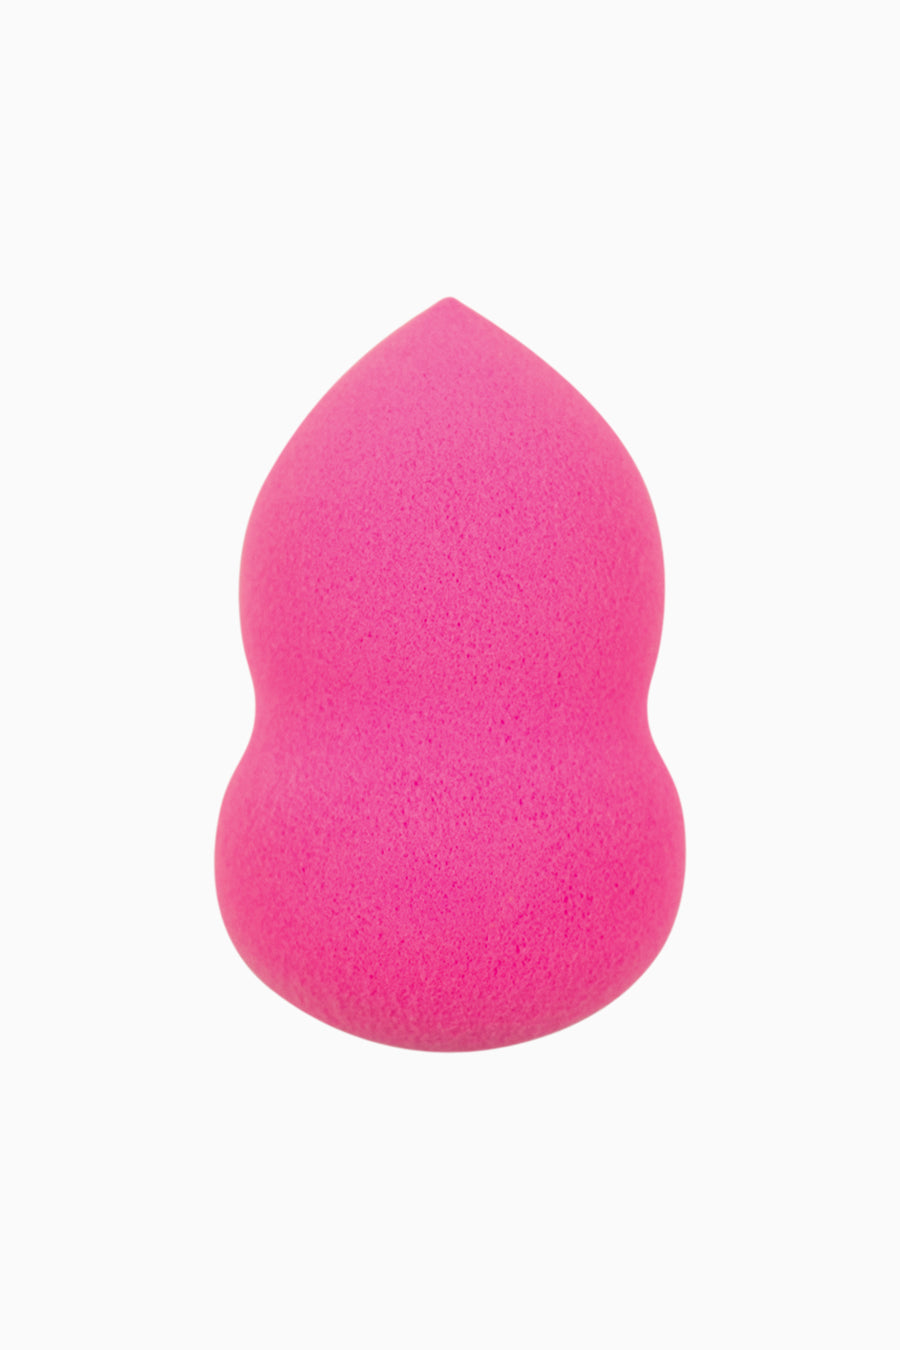 Make-Up Blending Sponge - Neon Pink